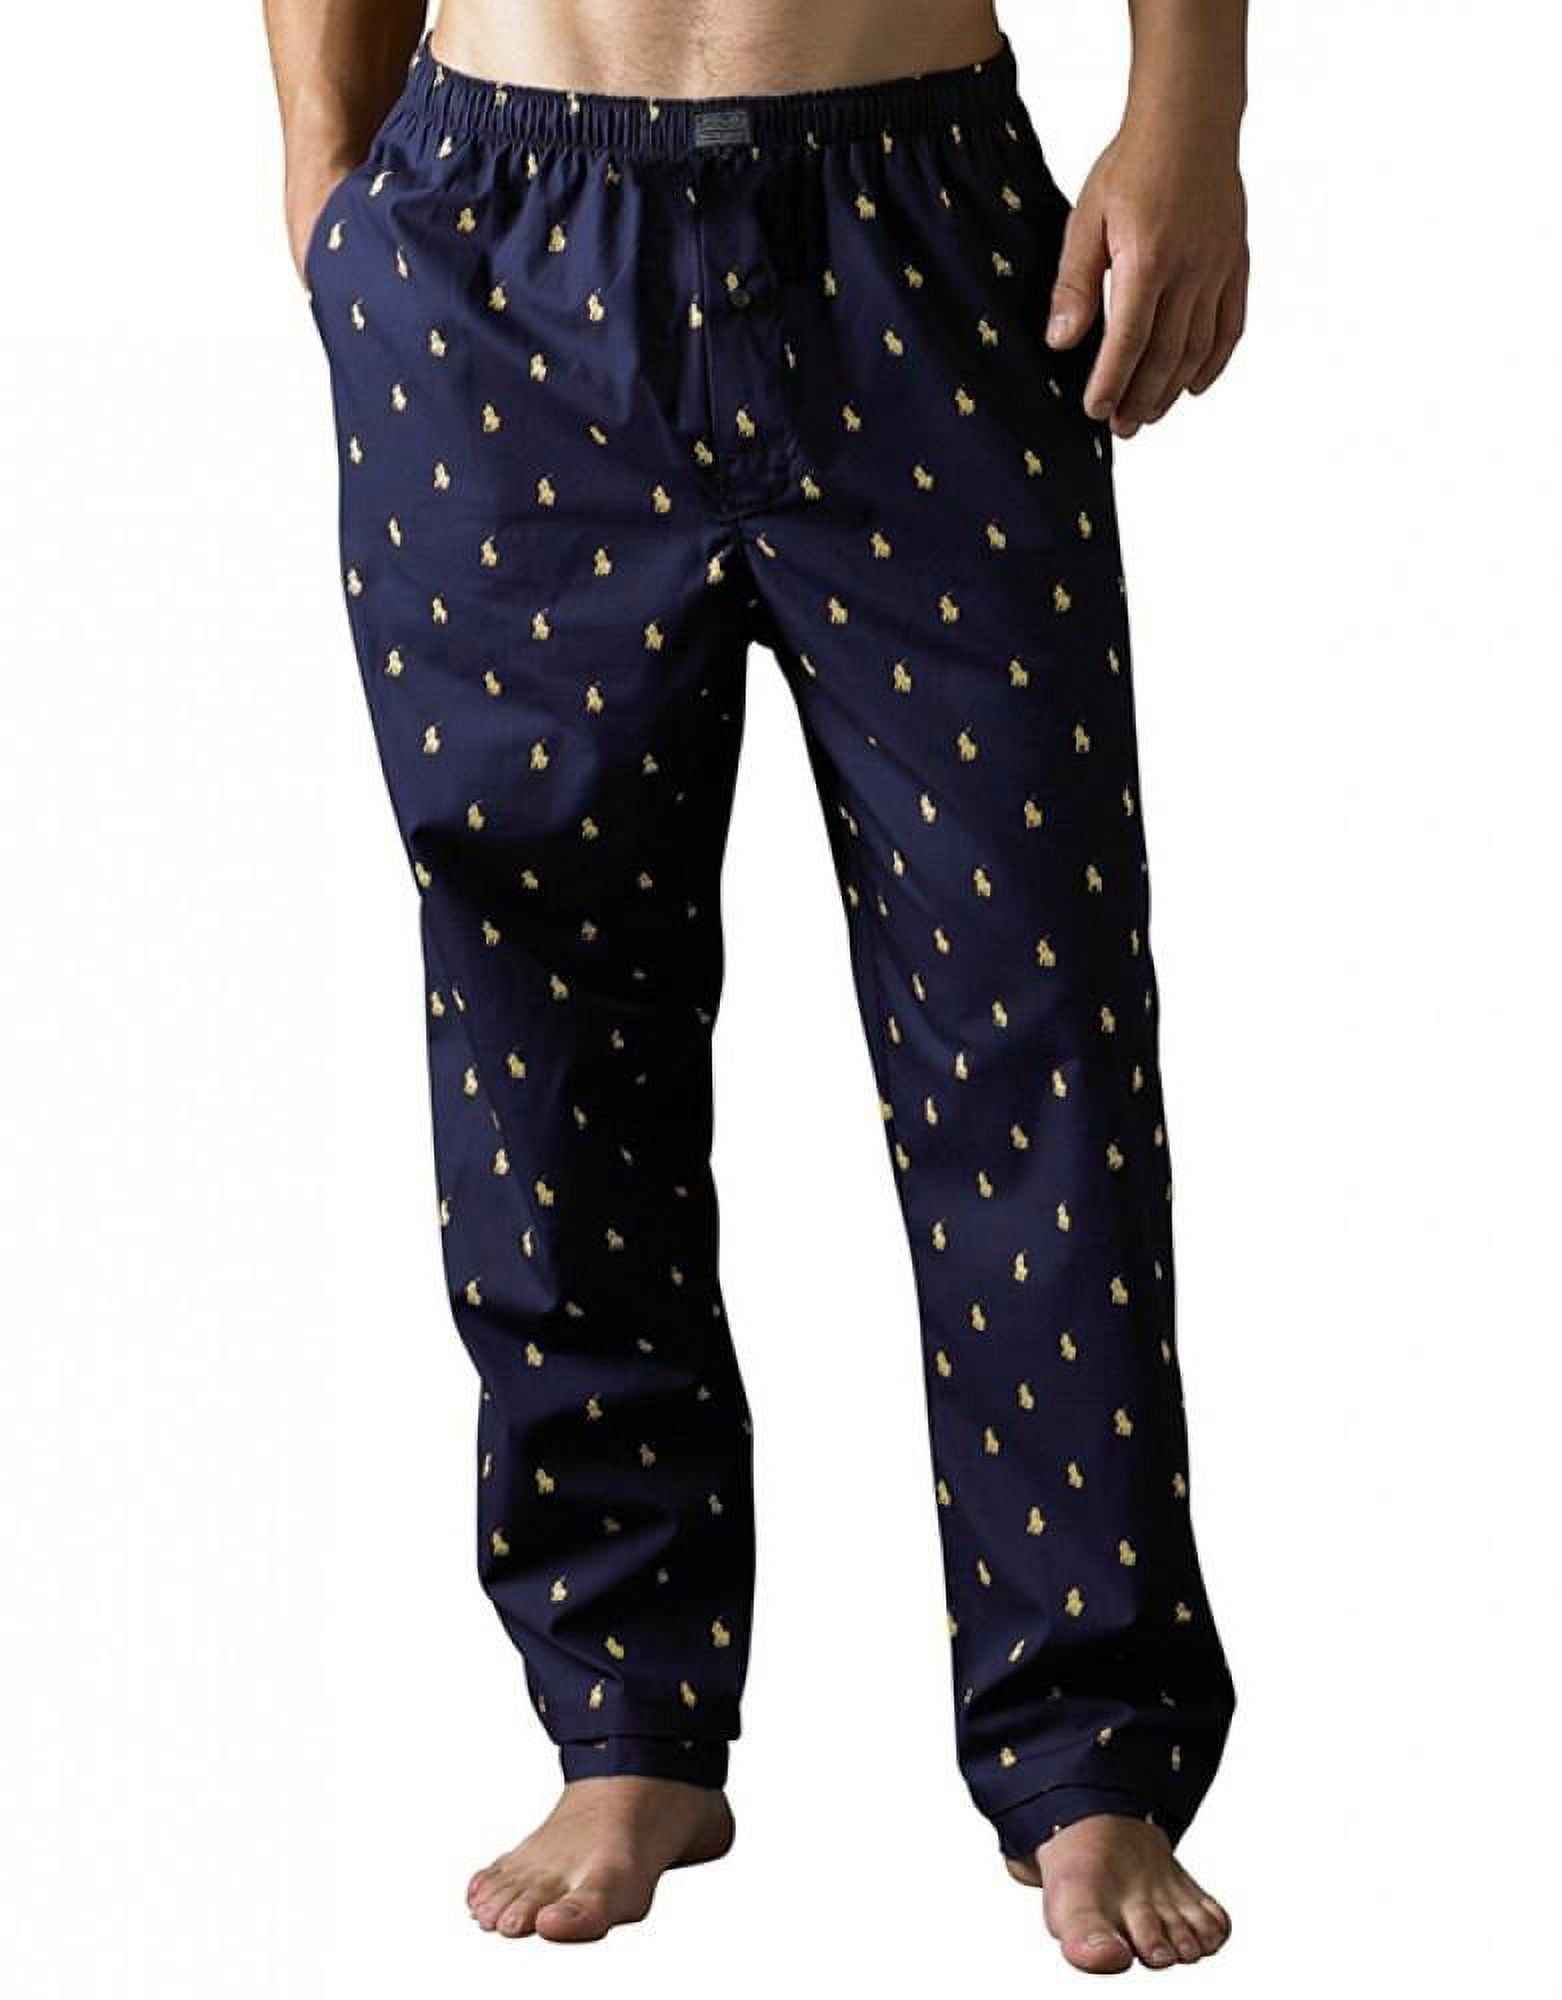  Polo Ralph Lauren Tall Flannel PJ Pants Blackwatch  Tartan/Rl2000 Red Pony Player 4XLT : Clothing, Shoes & Jewelry